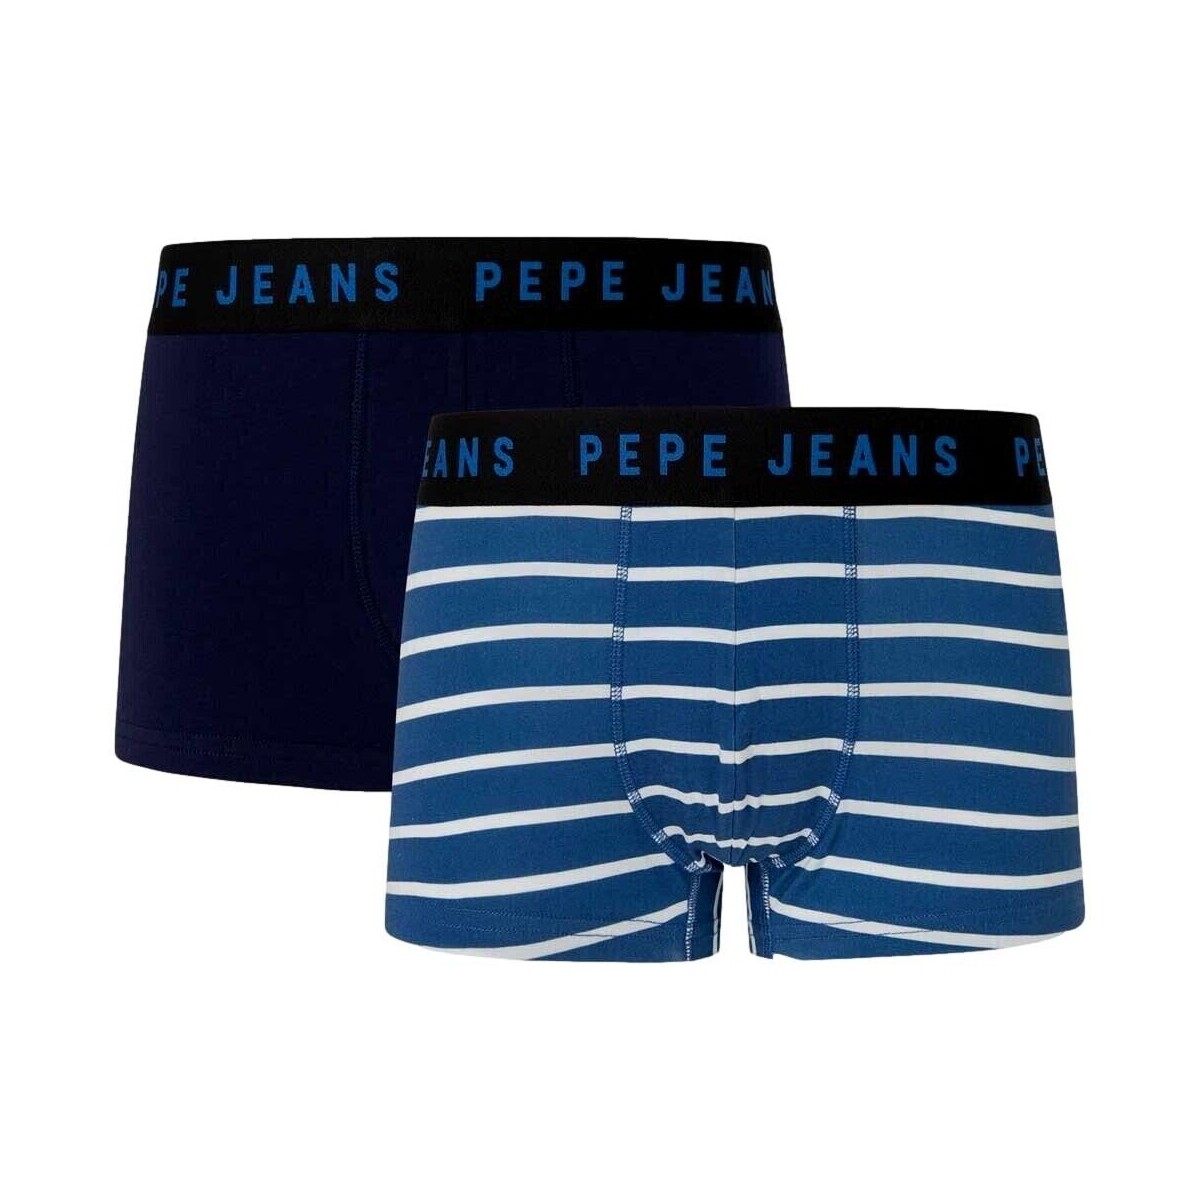 Underkläder Herr Boxershorts Pepe jeans PACK 2 BOXES STRIPES HOMBRE   PMU11149 Blå